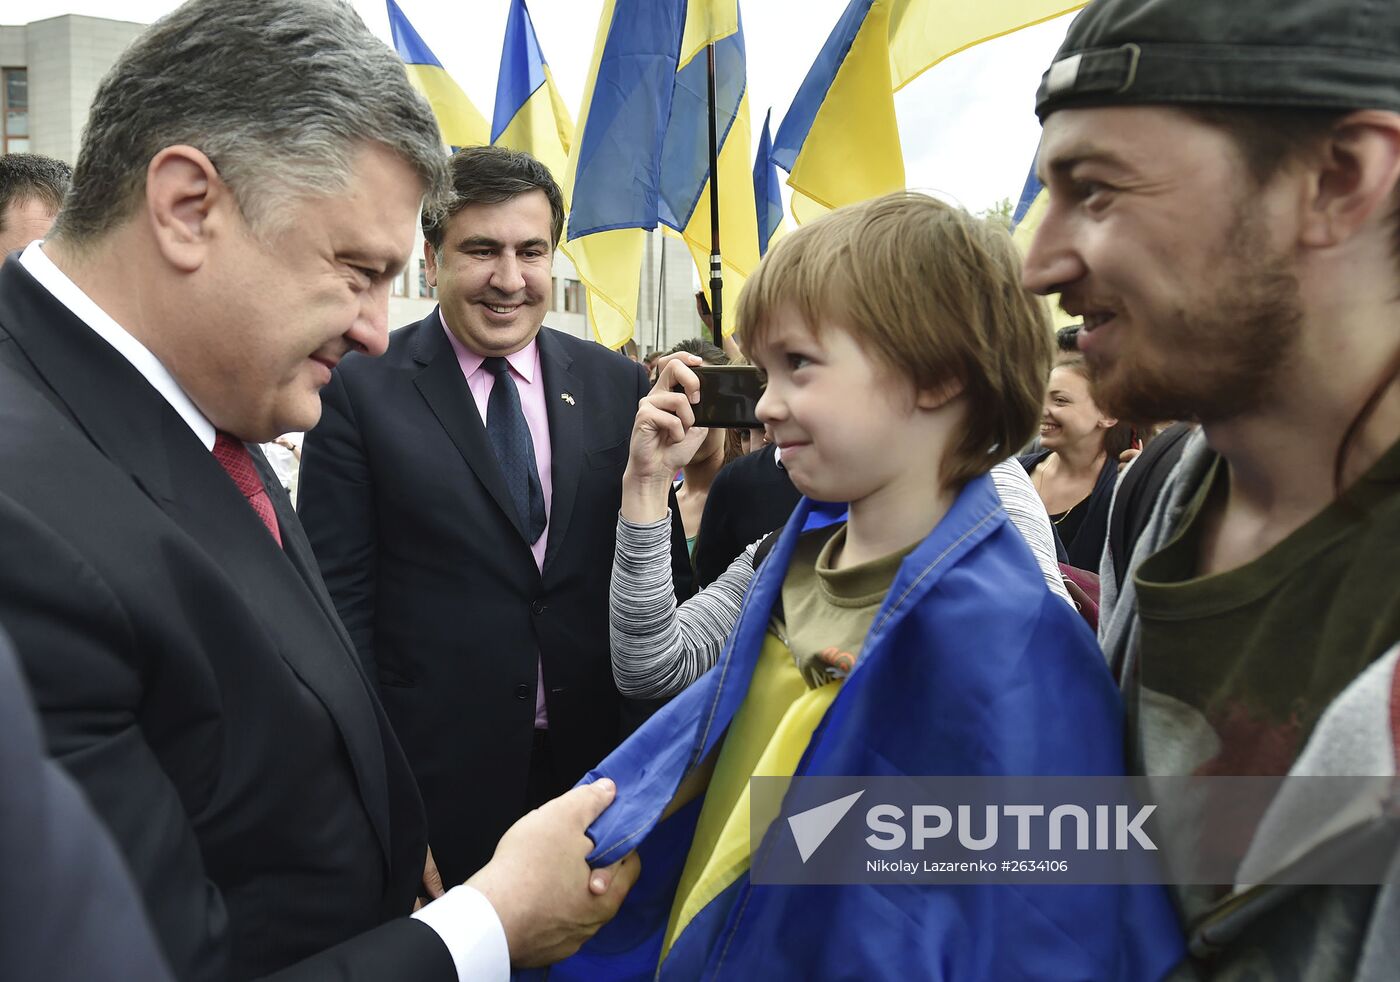 Ukraine's President Poroshenko appoints Saakashvili Governor of Odessa Region